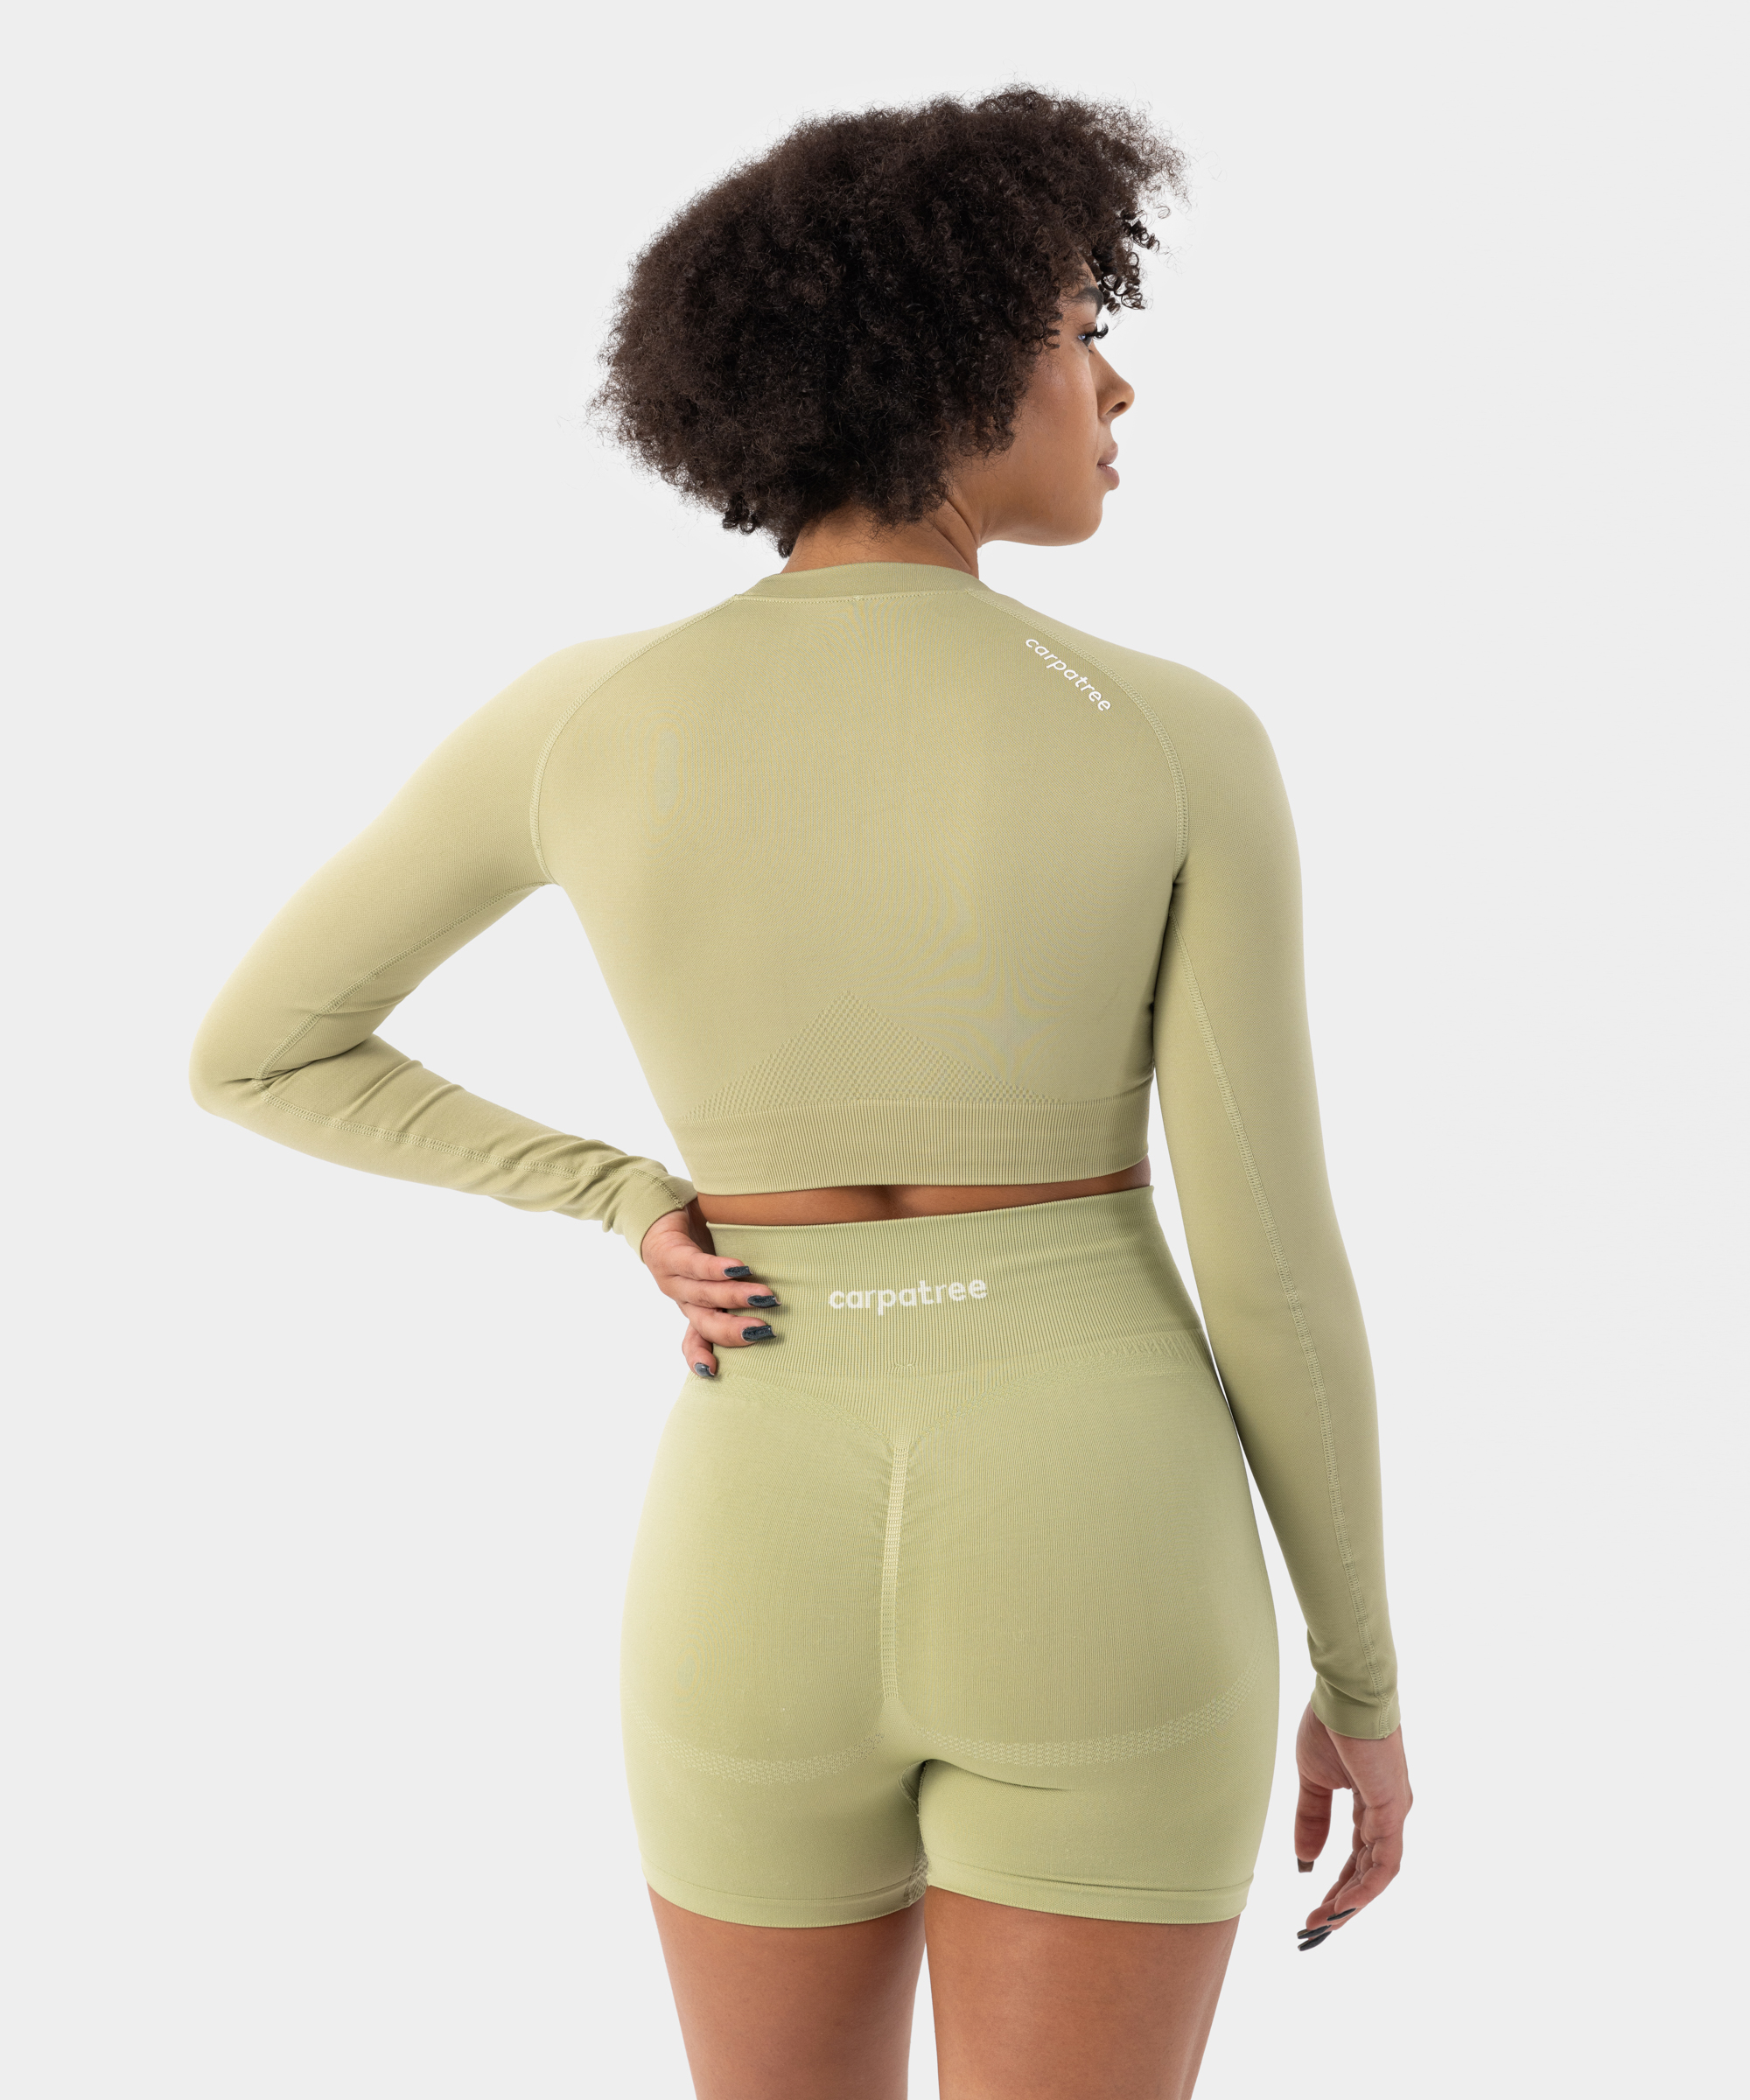 MALILA - Leaf Print Set: Long-Sleeve Crop Rashguard + High-Waist Shorts, YesStyle